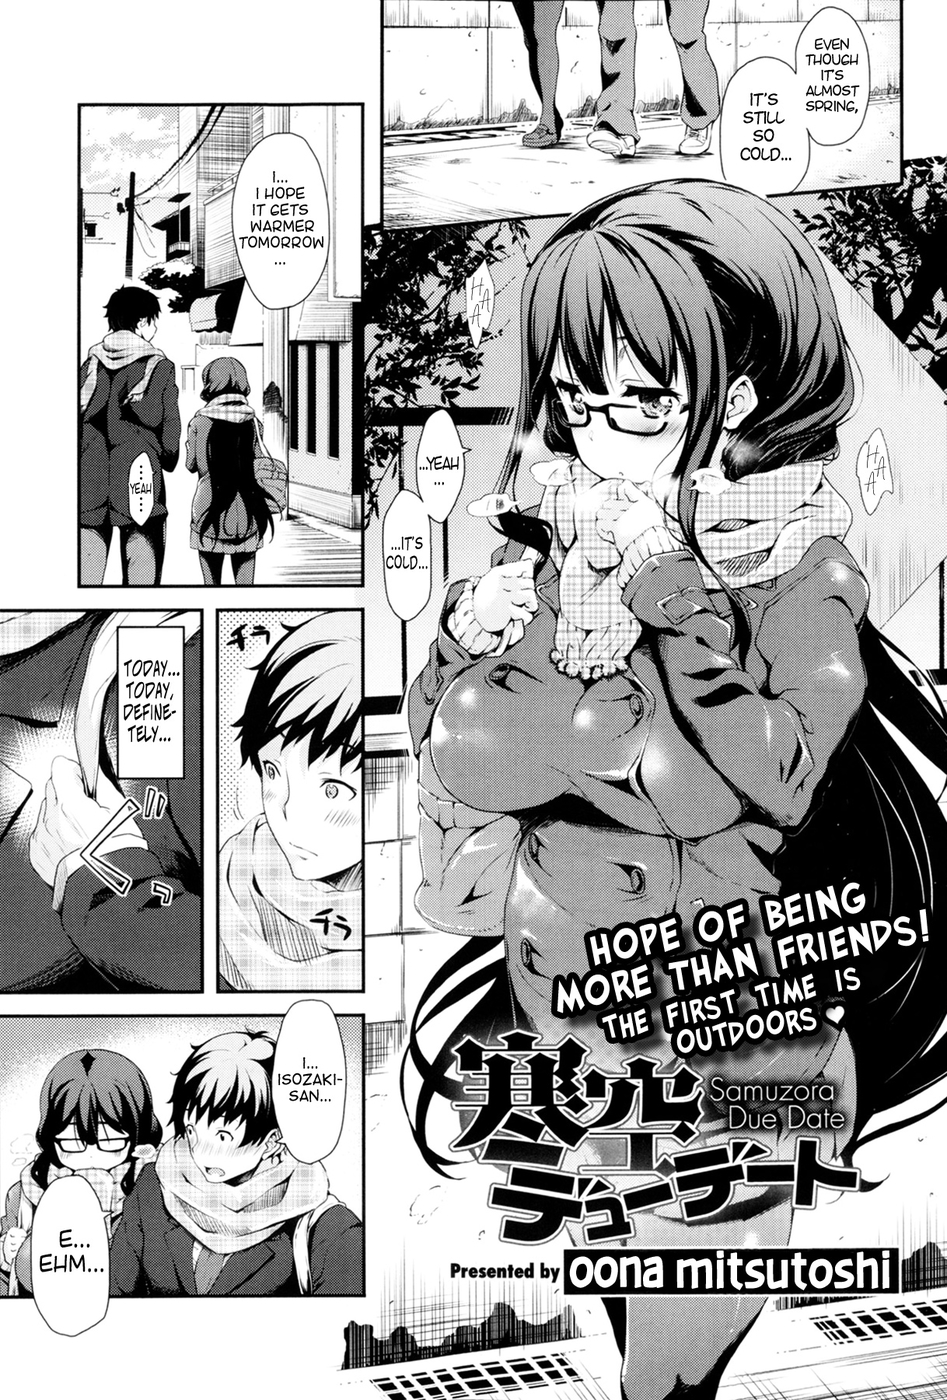 Hentai Manga Comic-Samuzora Due Date-Read-1